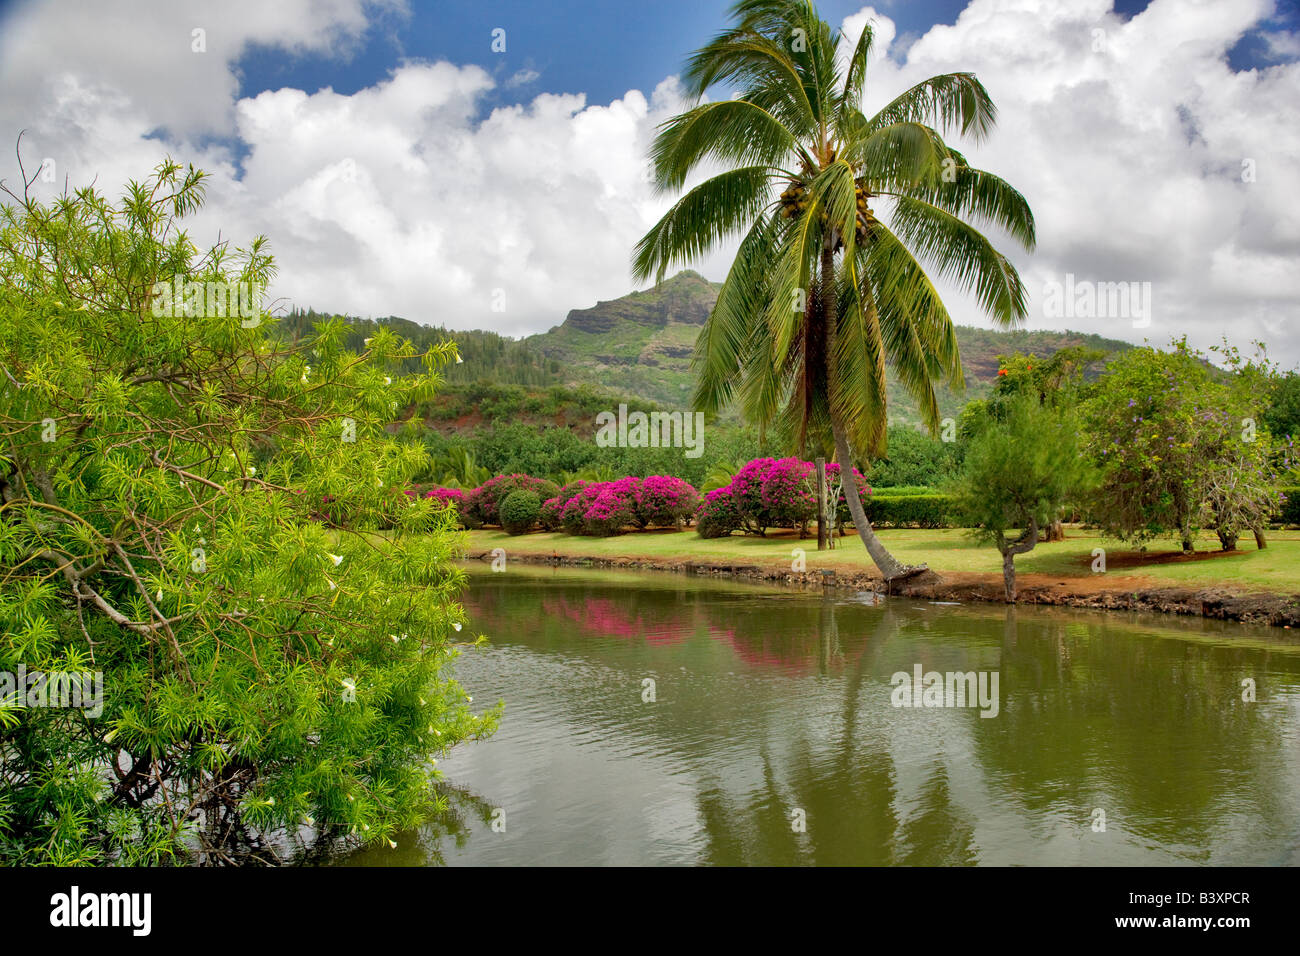 Palm over pond at Smith s Tropical Gardens Kauai Hawaii Stock Photo